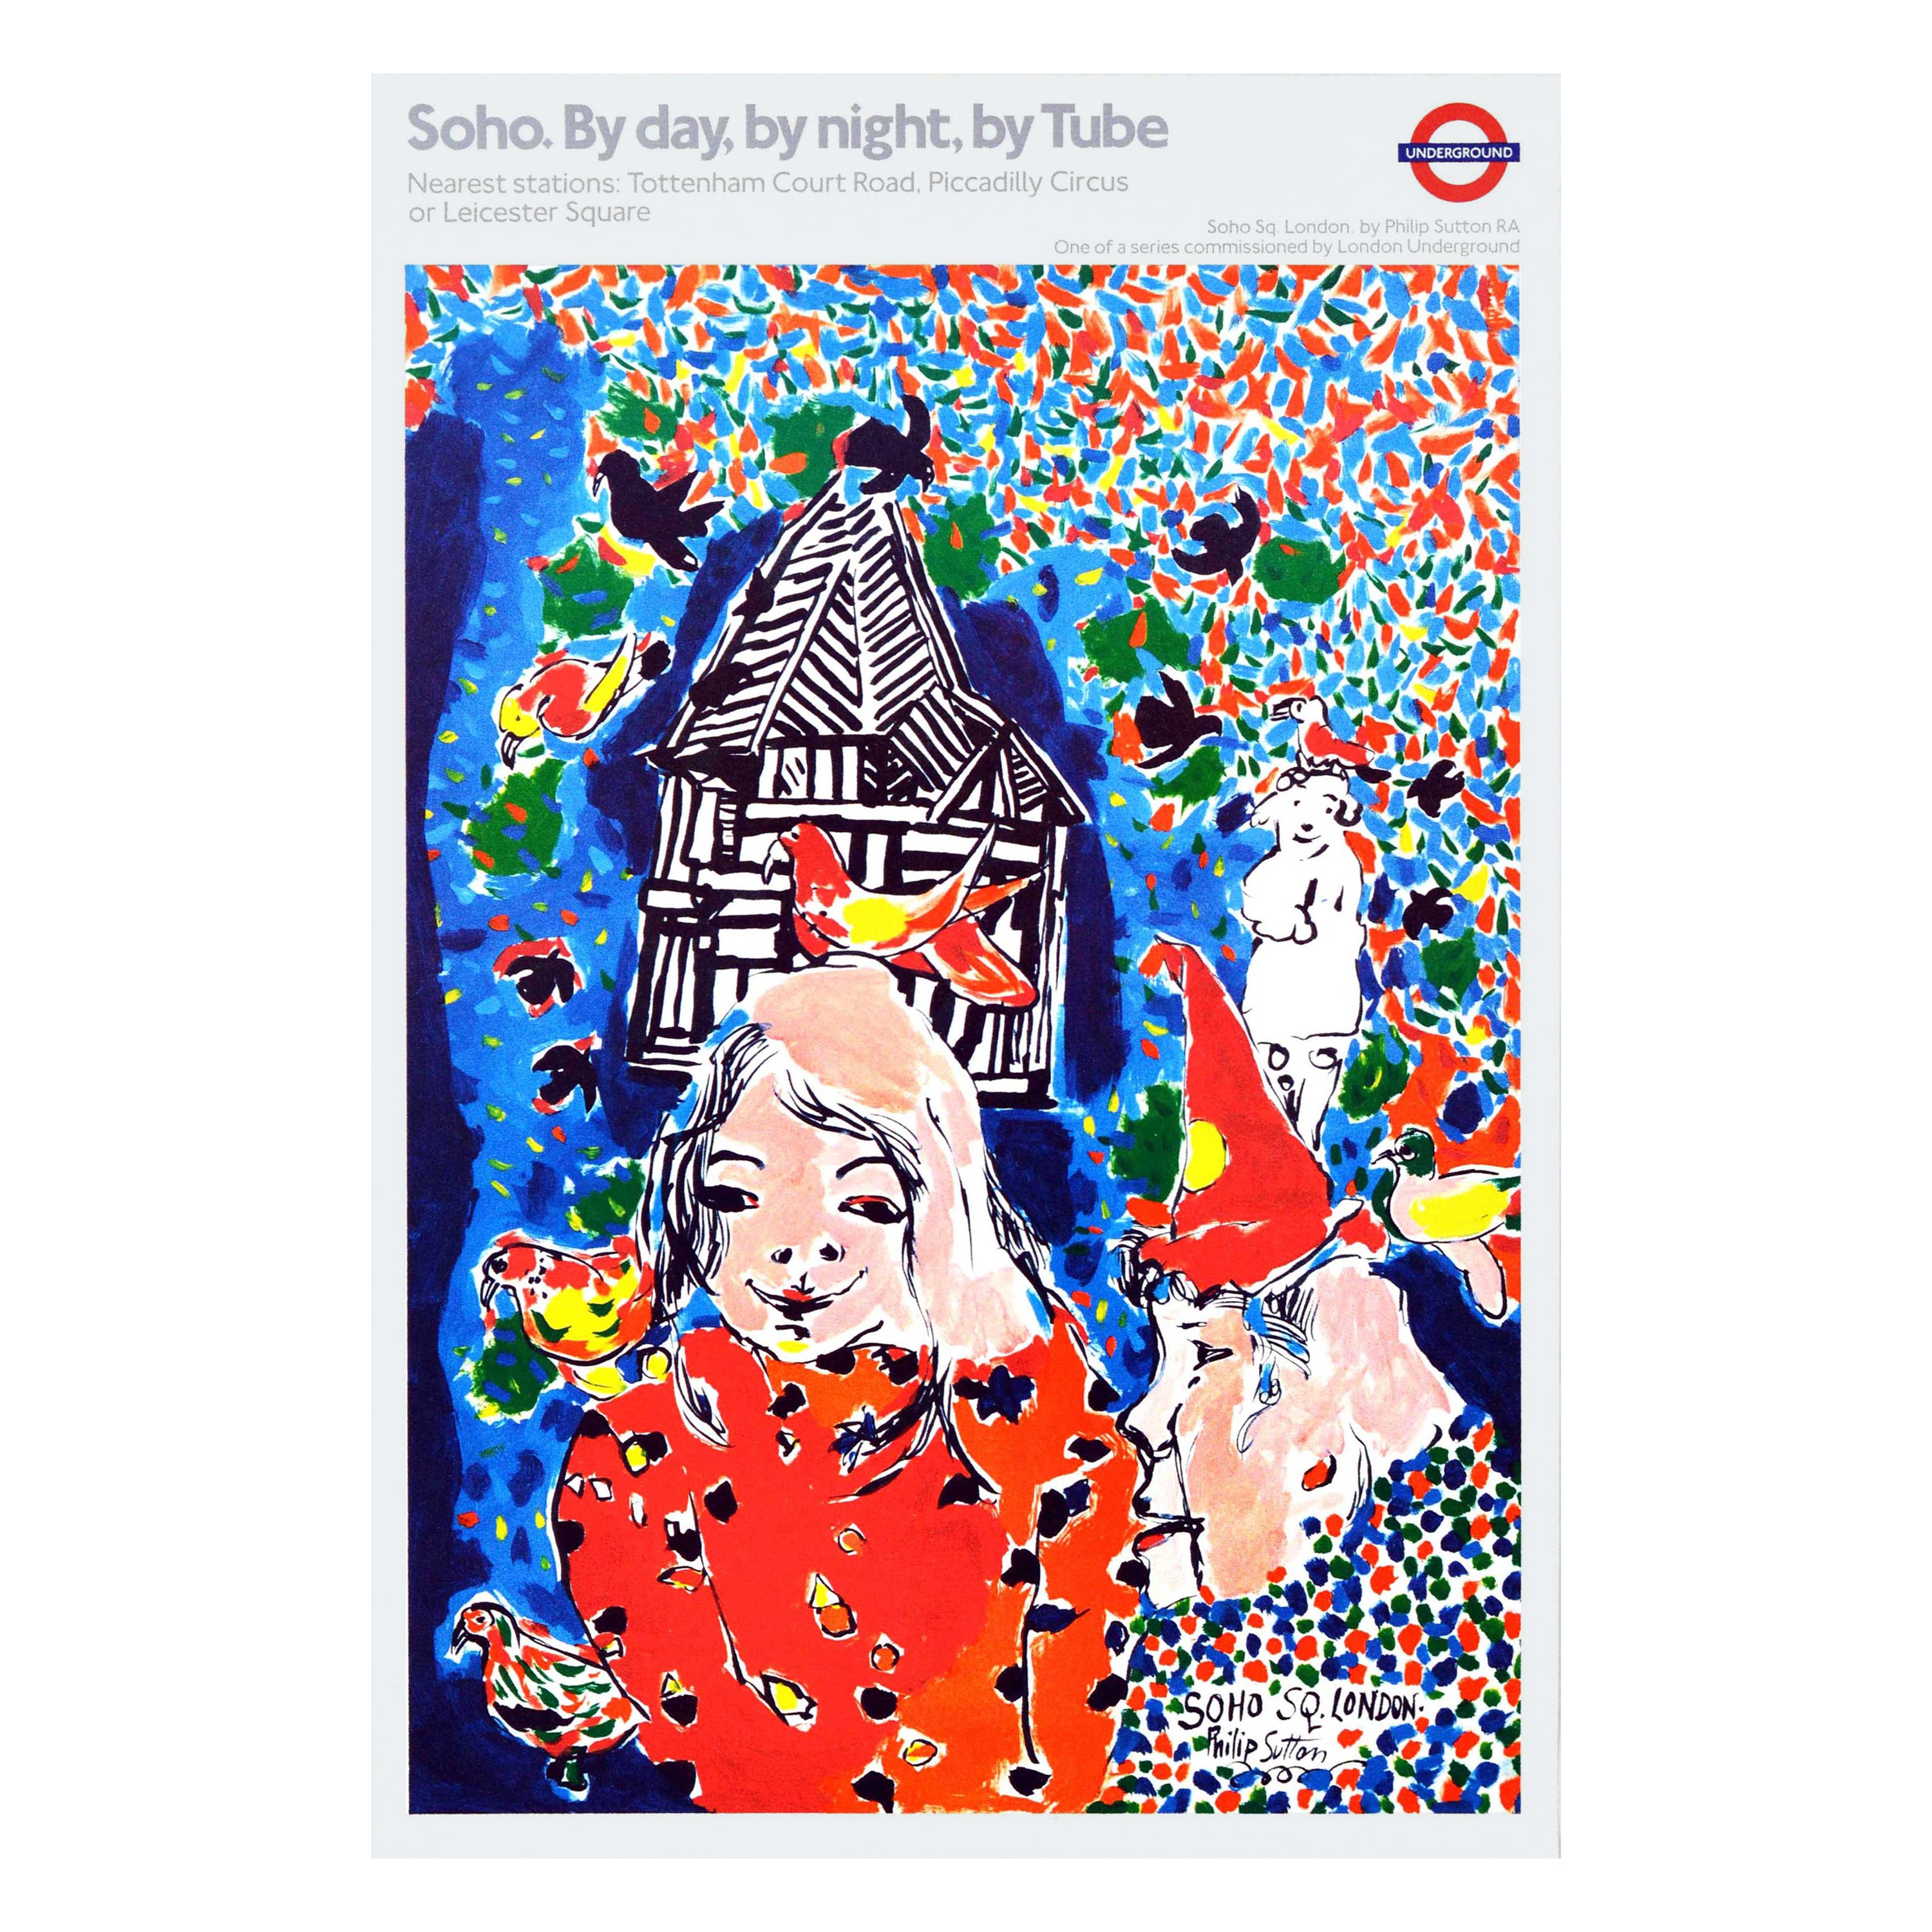 Original Vintage London Underground Poster Soho By Tube London Transport Sutton